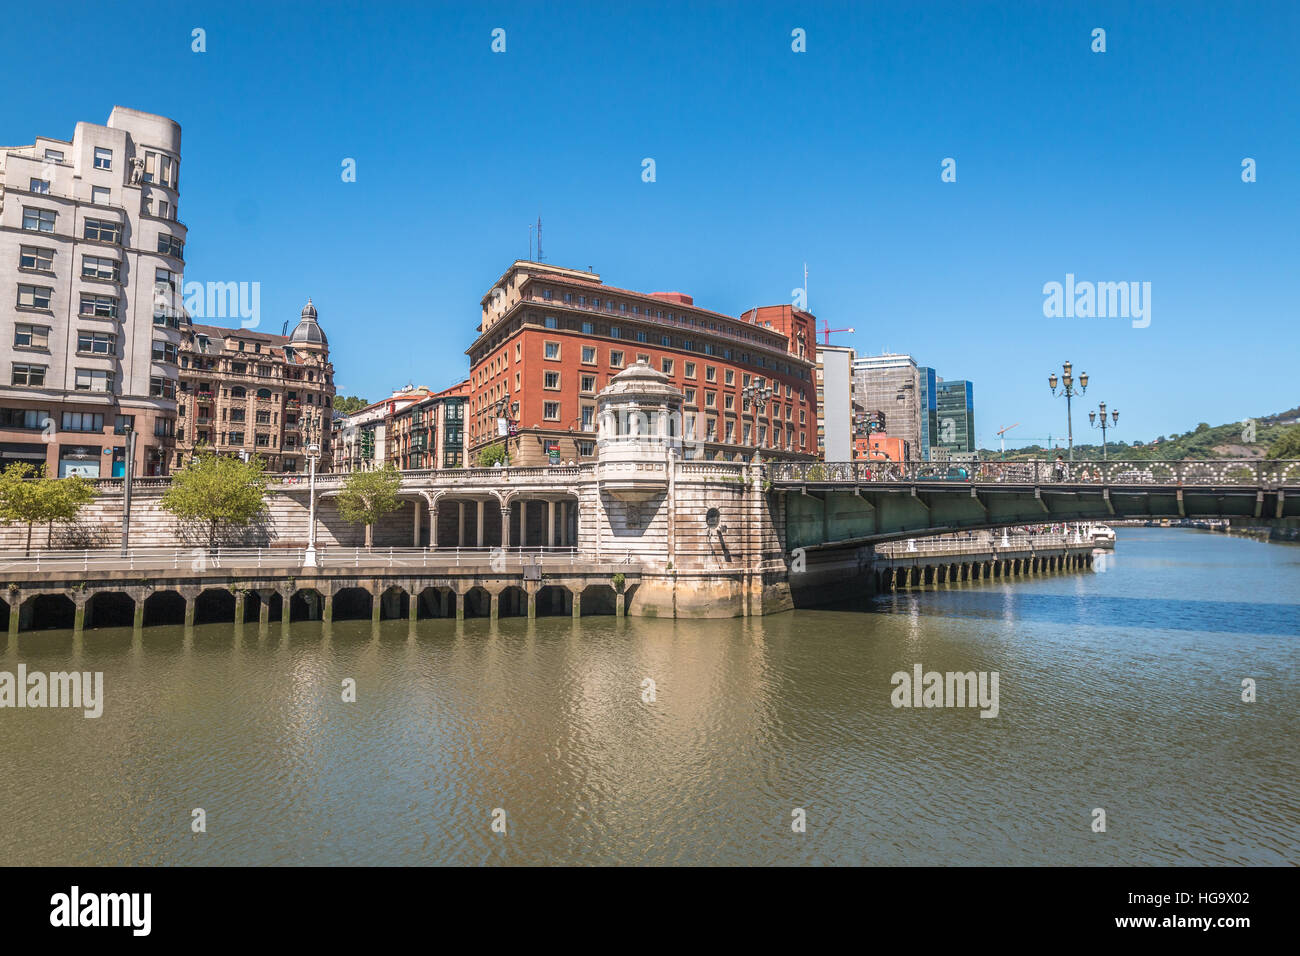 Nice view of Bilbao city in Spain Stock Photo